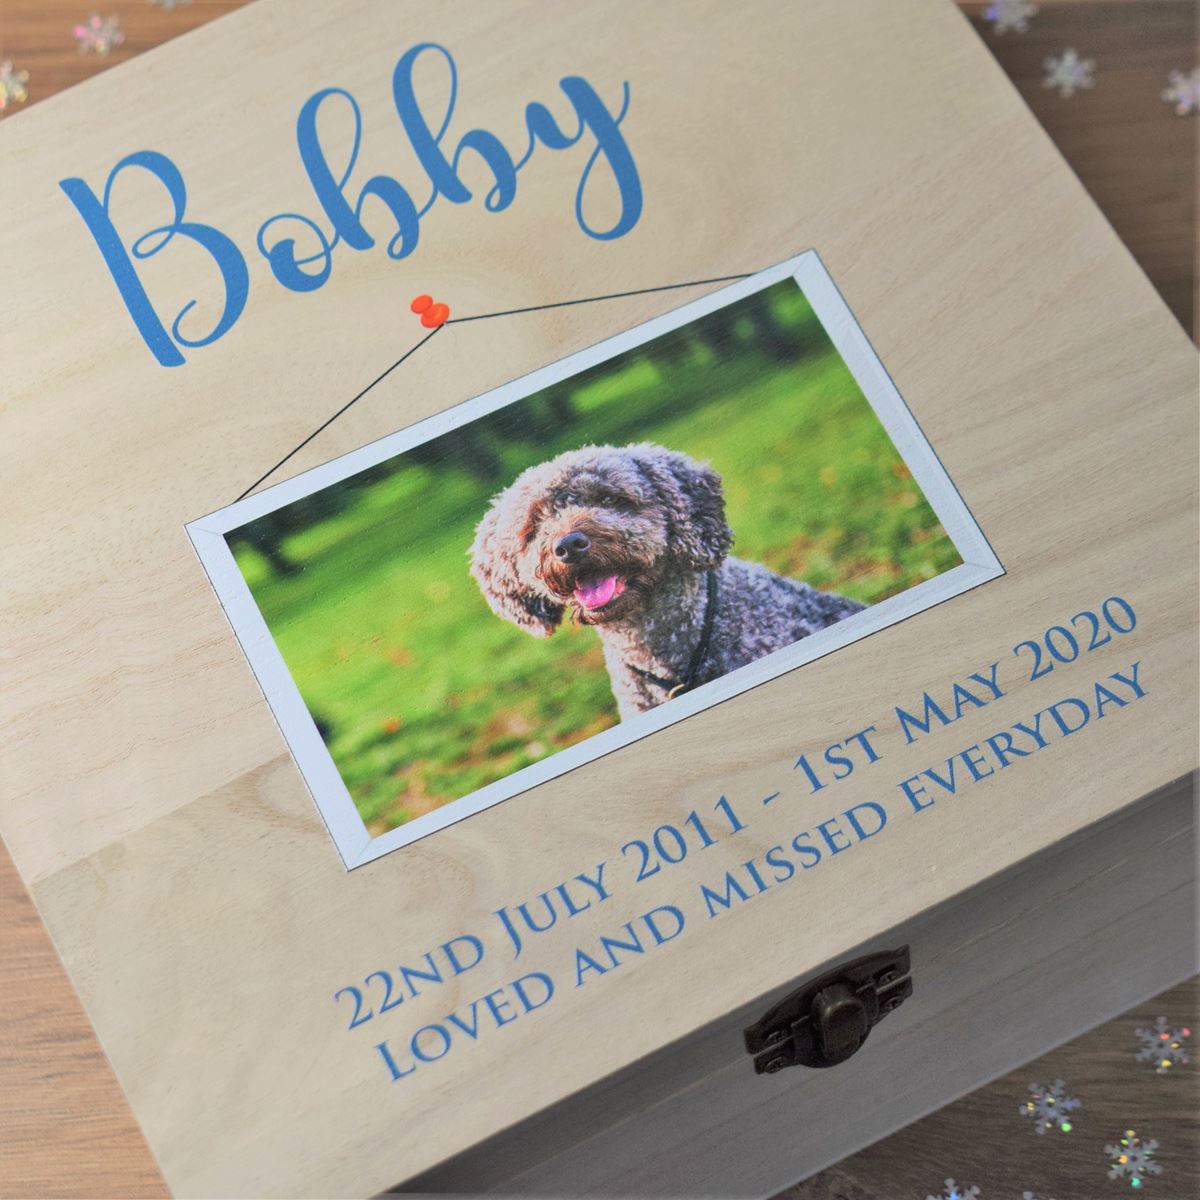 Personalised Printed Photo Pet Memorial Keepsake Wooden Box